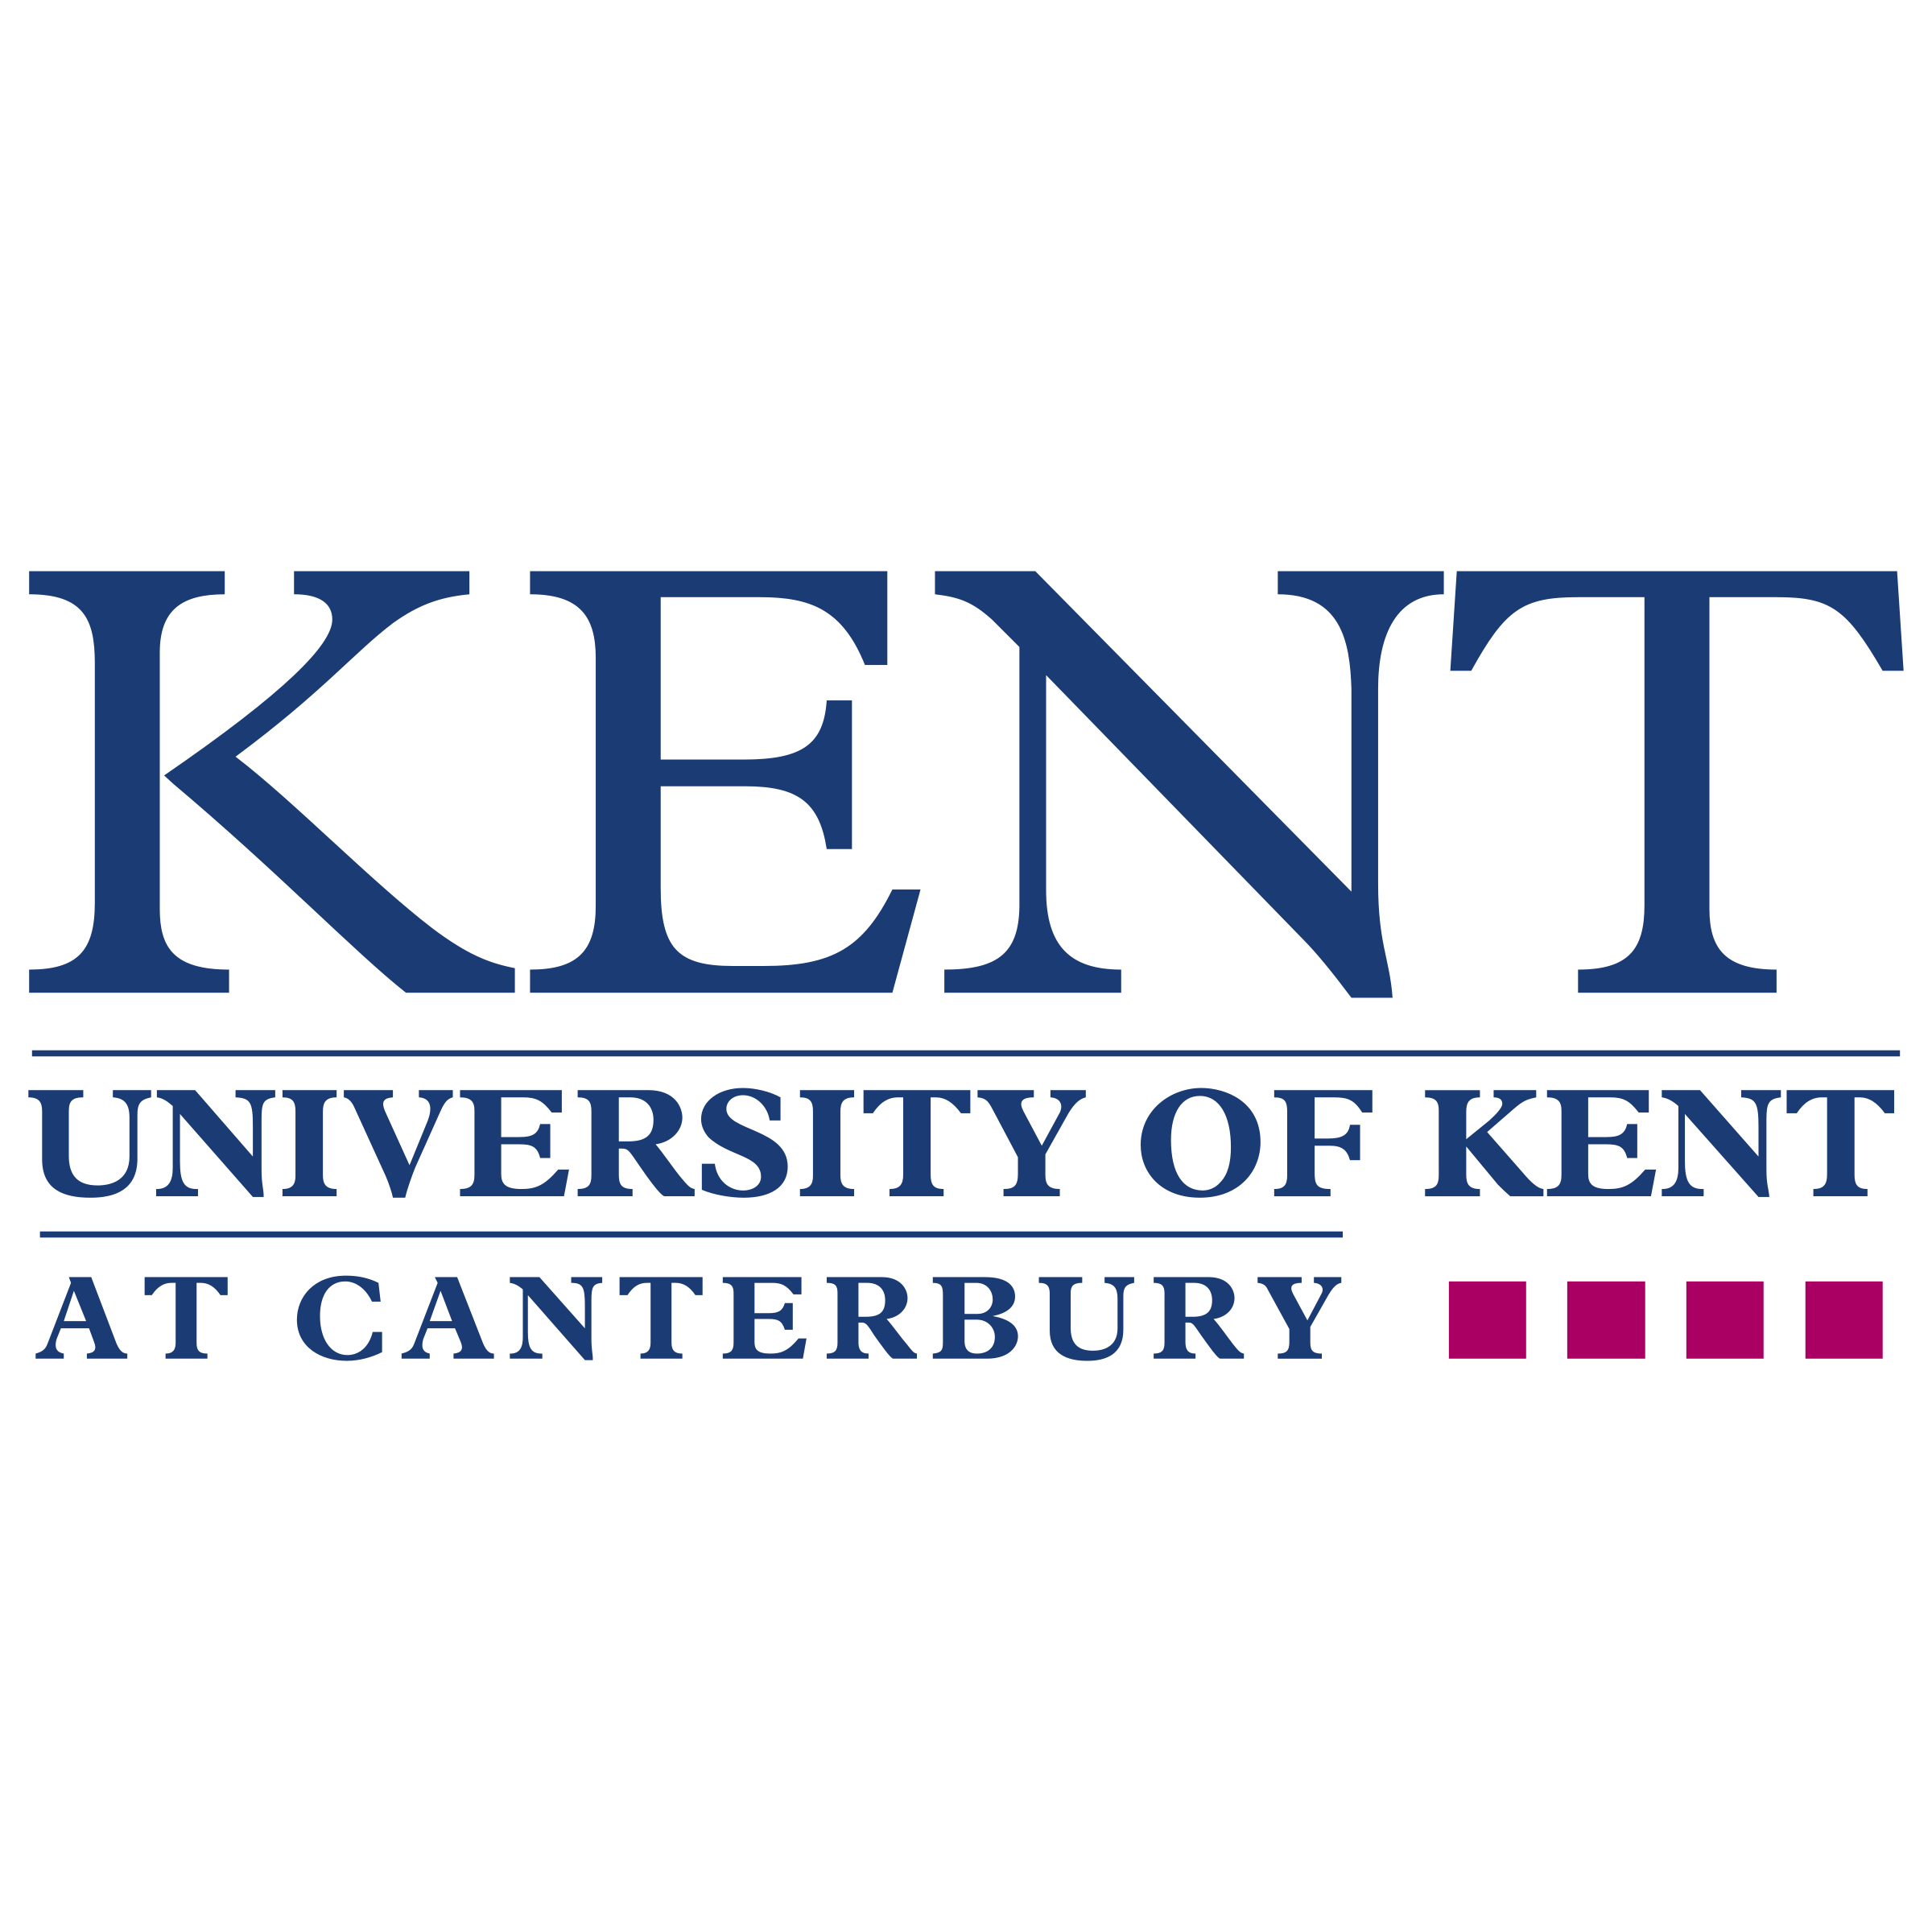 Kent Logo - University of Kent Logo PNG Transparent & SVG Vector - Freebie Supply